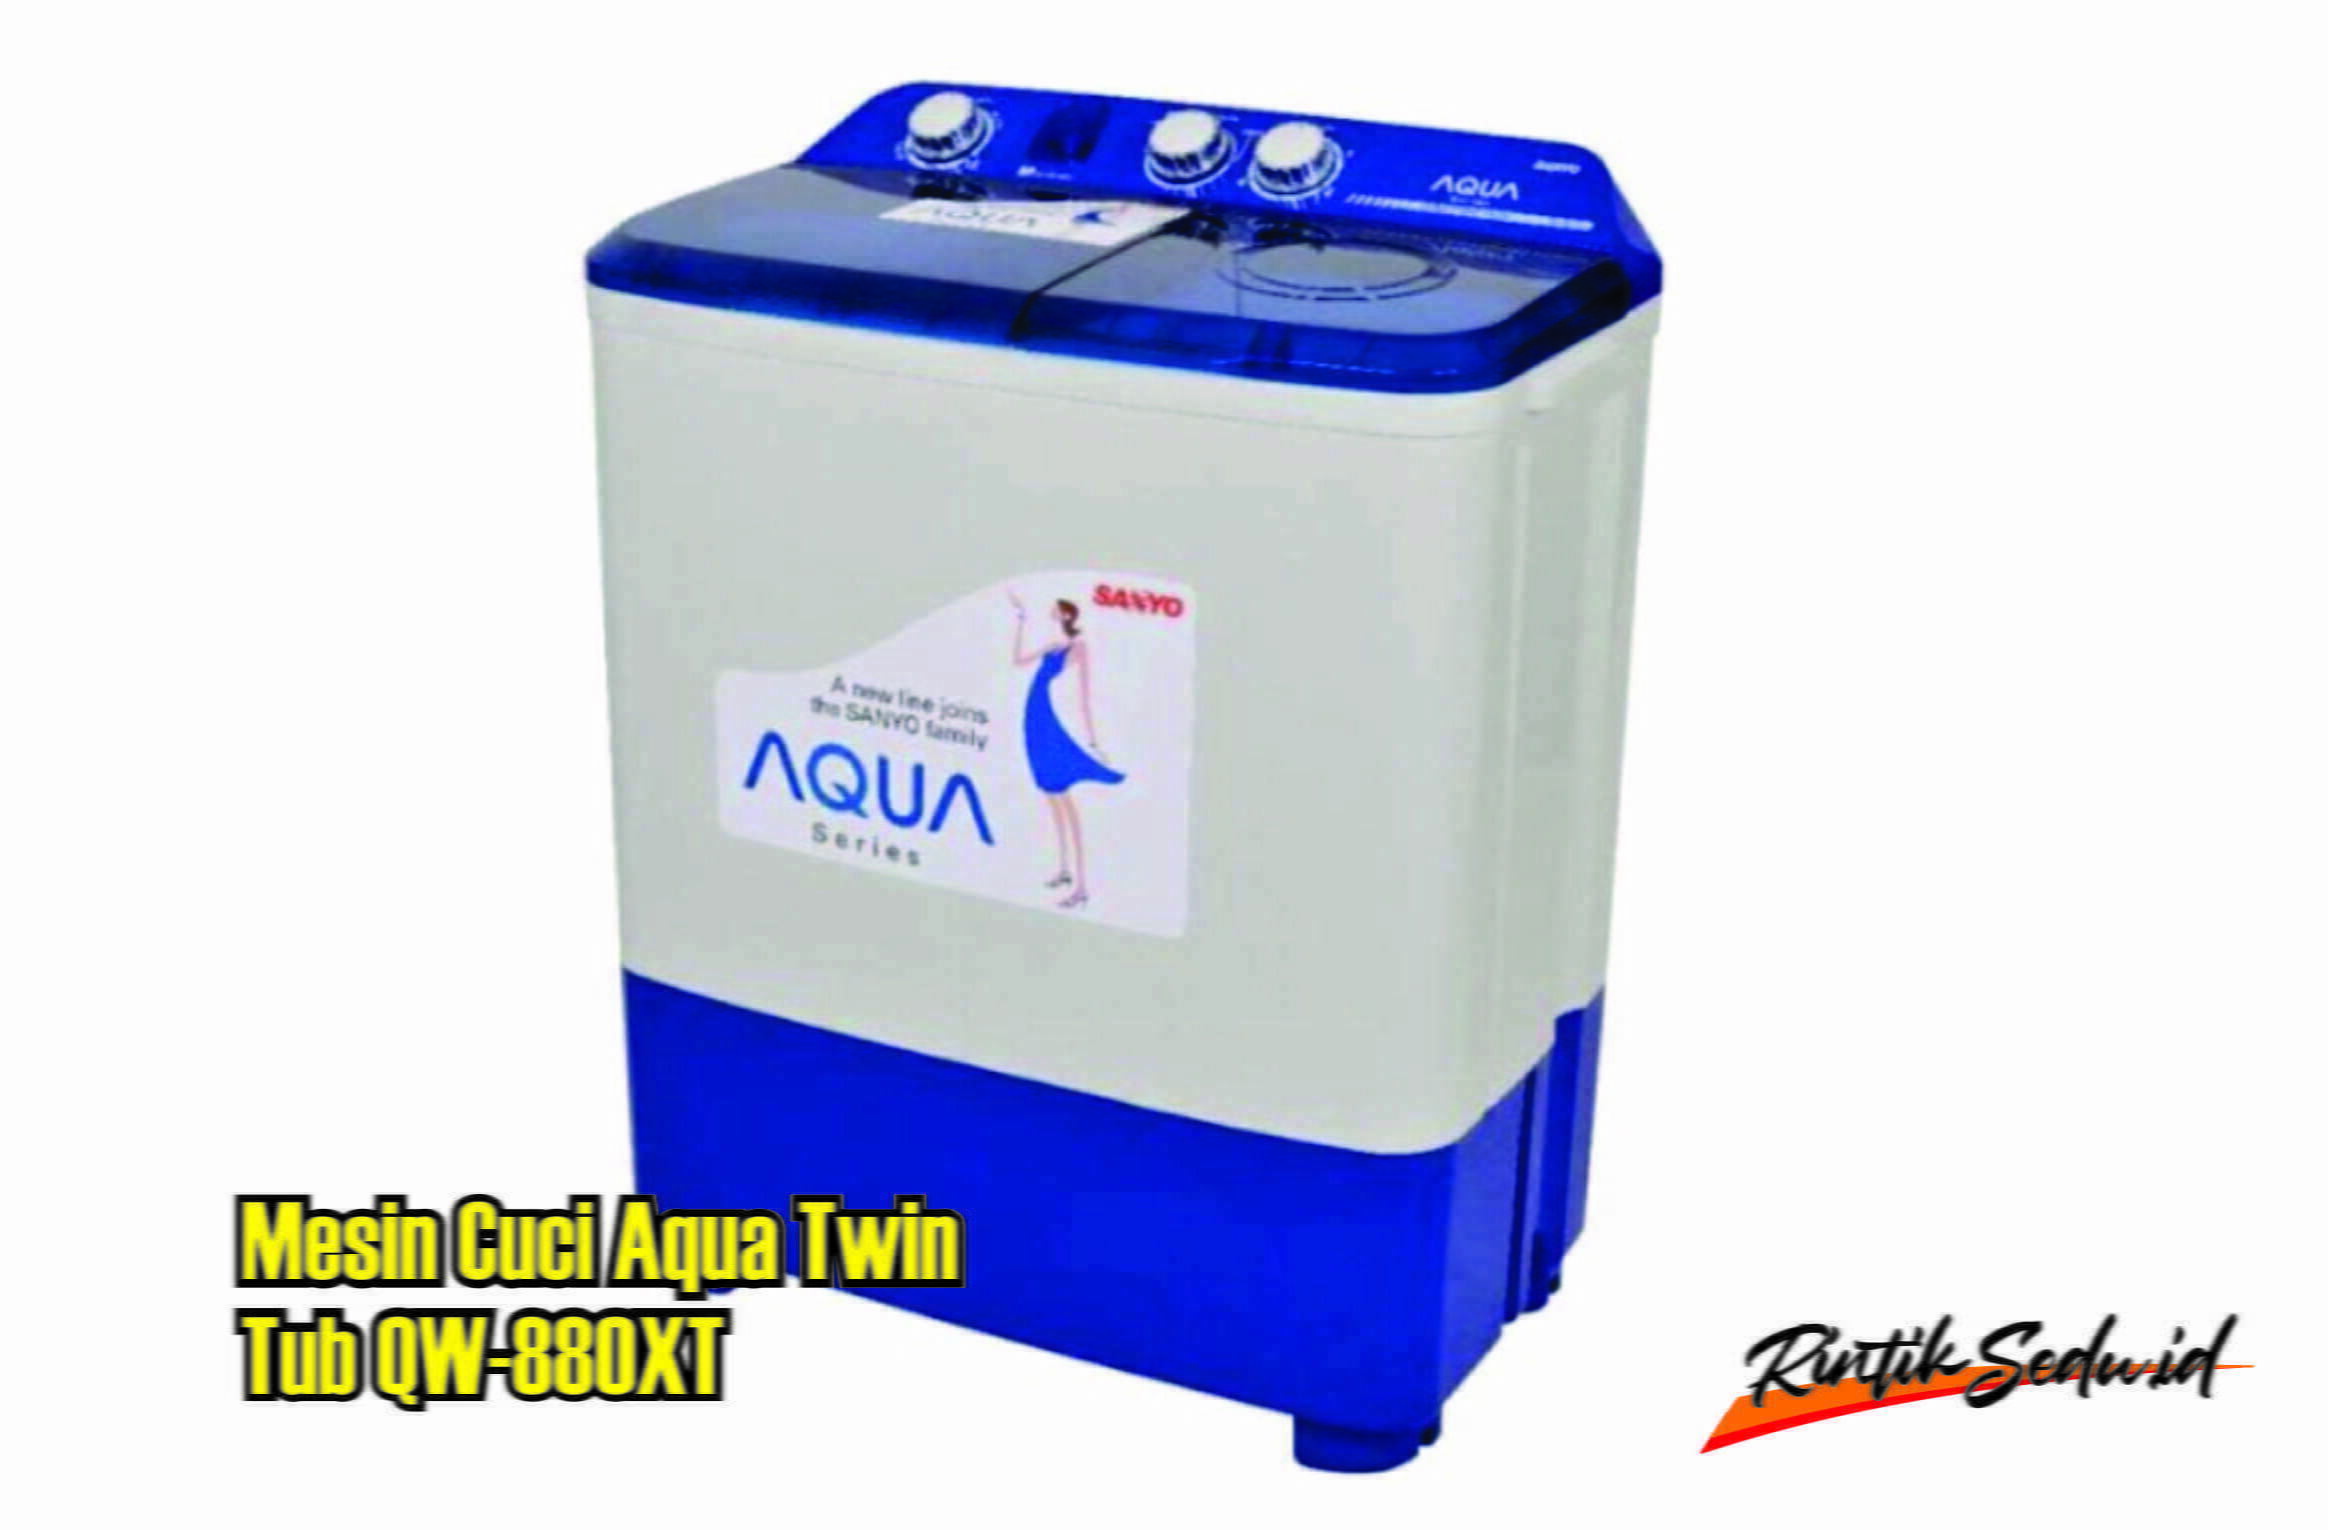 Mesin Cuci Aqua Twin Tub QW 880XT